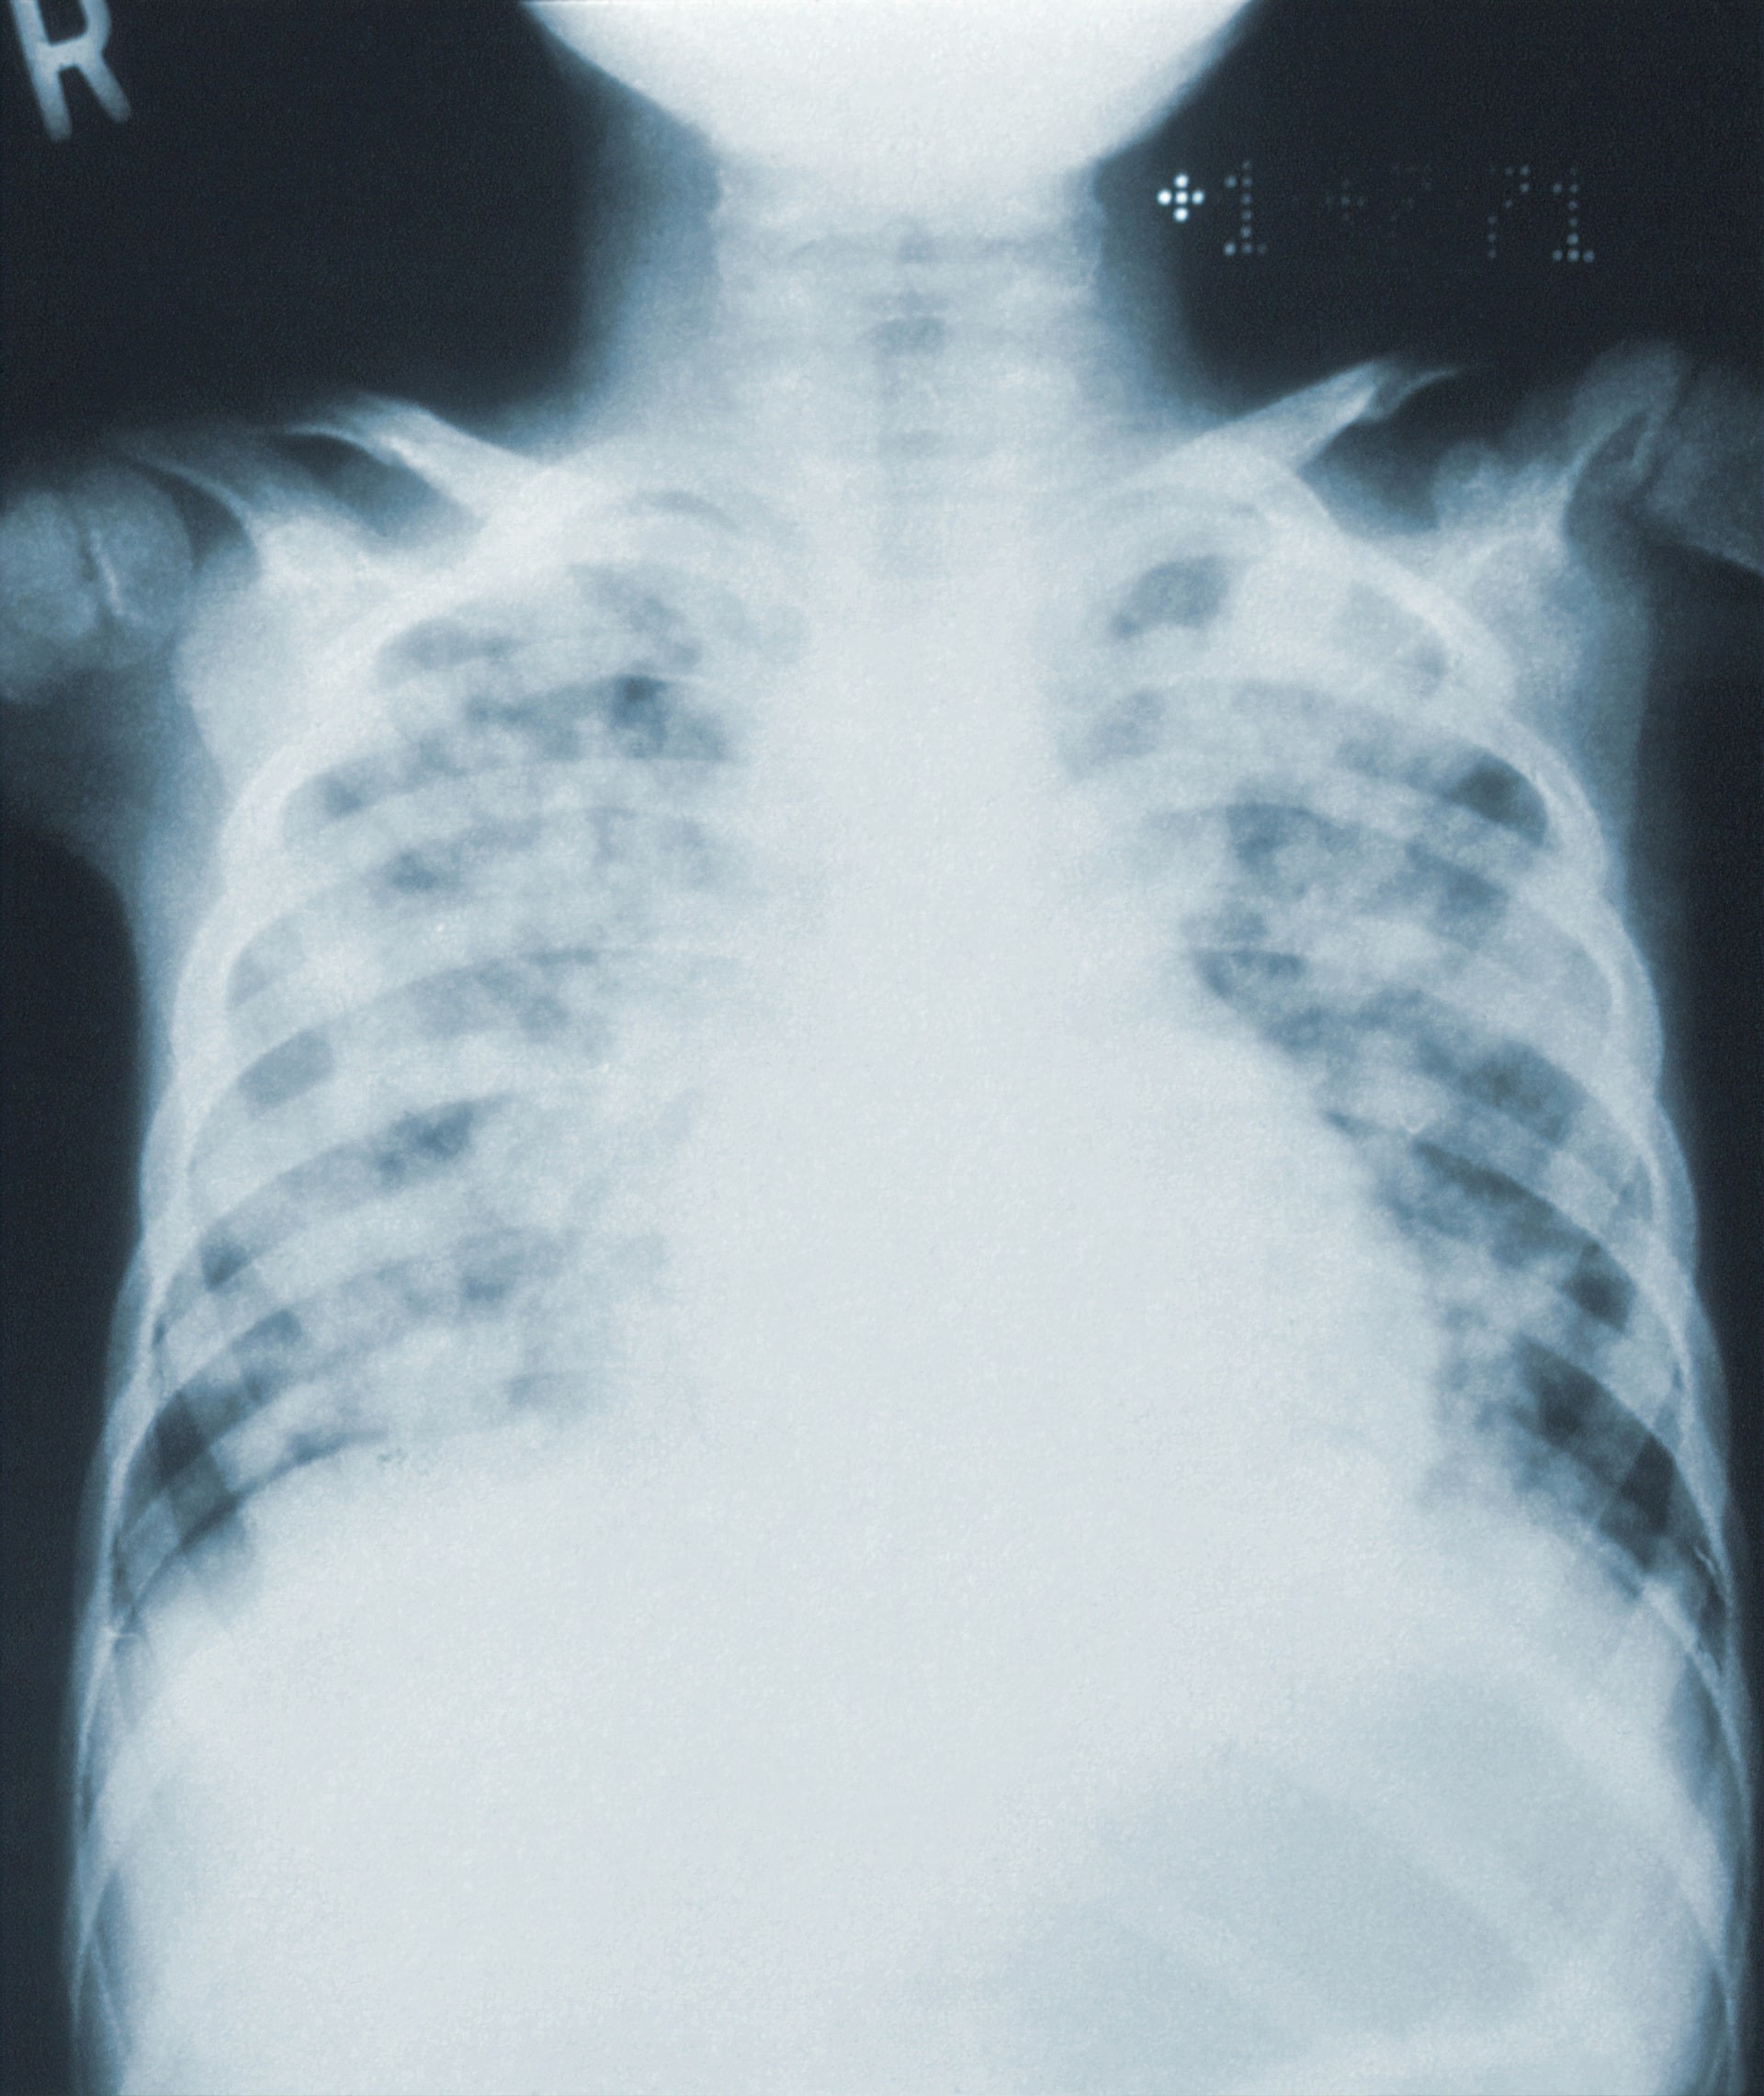 Raio-x mostra pneumonia (Foto: CDC/Unsplash)